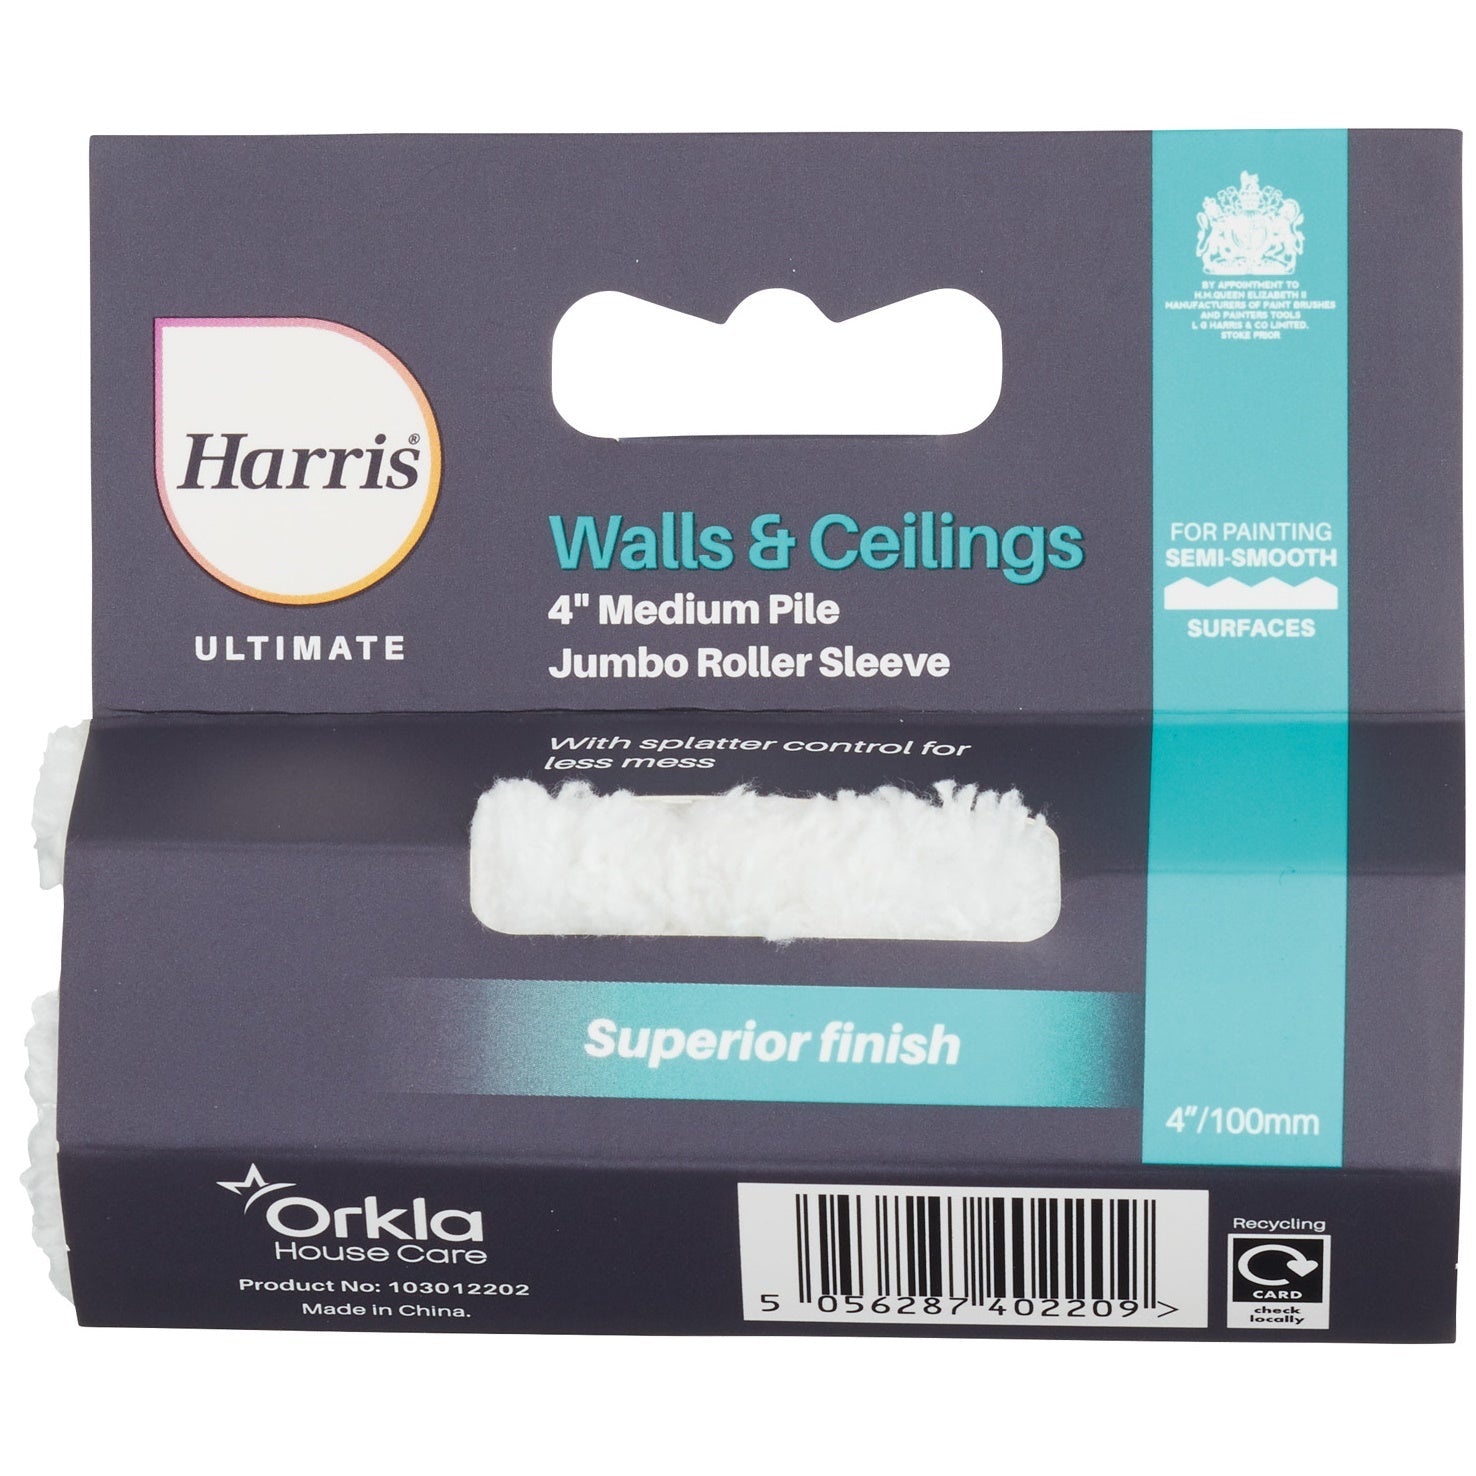 Harris Ultimate 103012202 Walls & Ceilings 4" Medium Pile Jumbo Roller Sleeve - Premium Rollers from HARRIS - Just $1.2! Shop now at W Hurst & Son (IW) Ltd